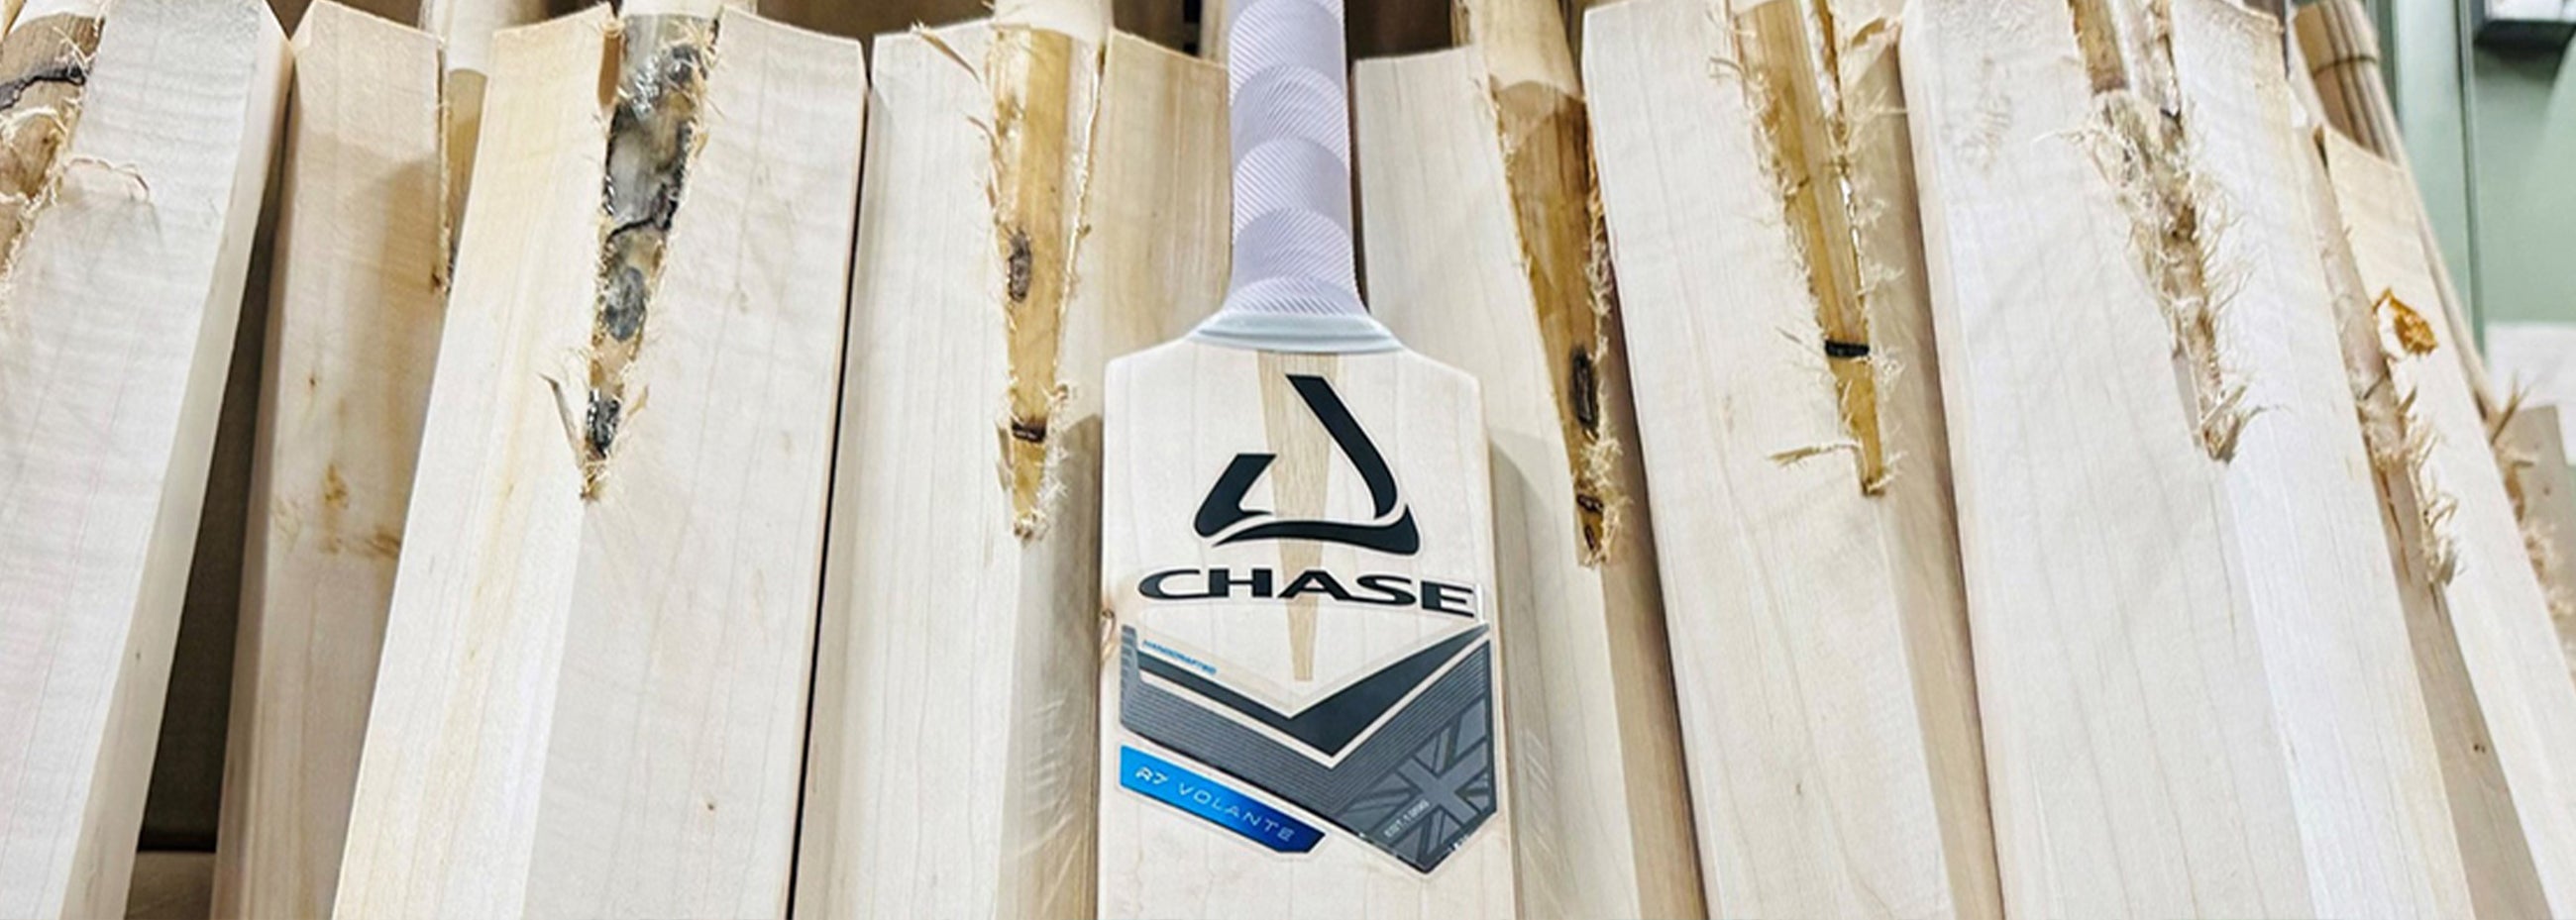 Chase Cricket Bats